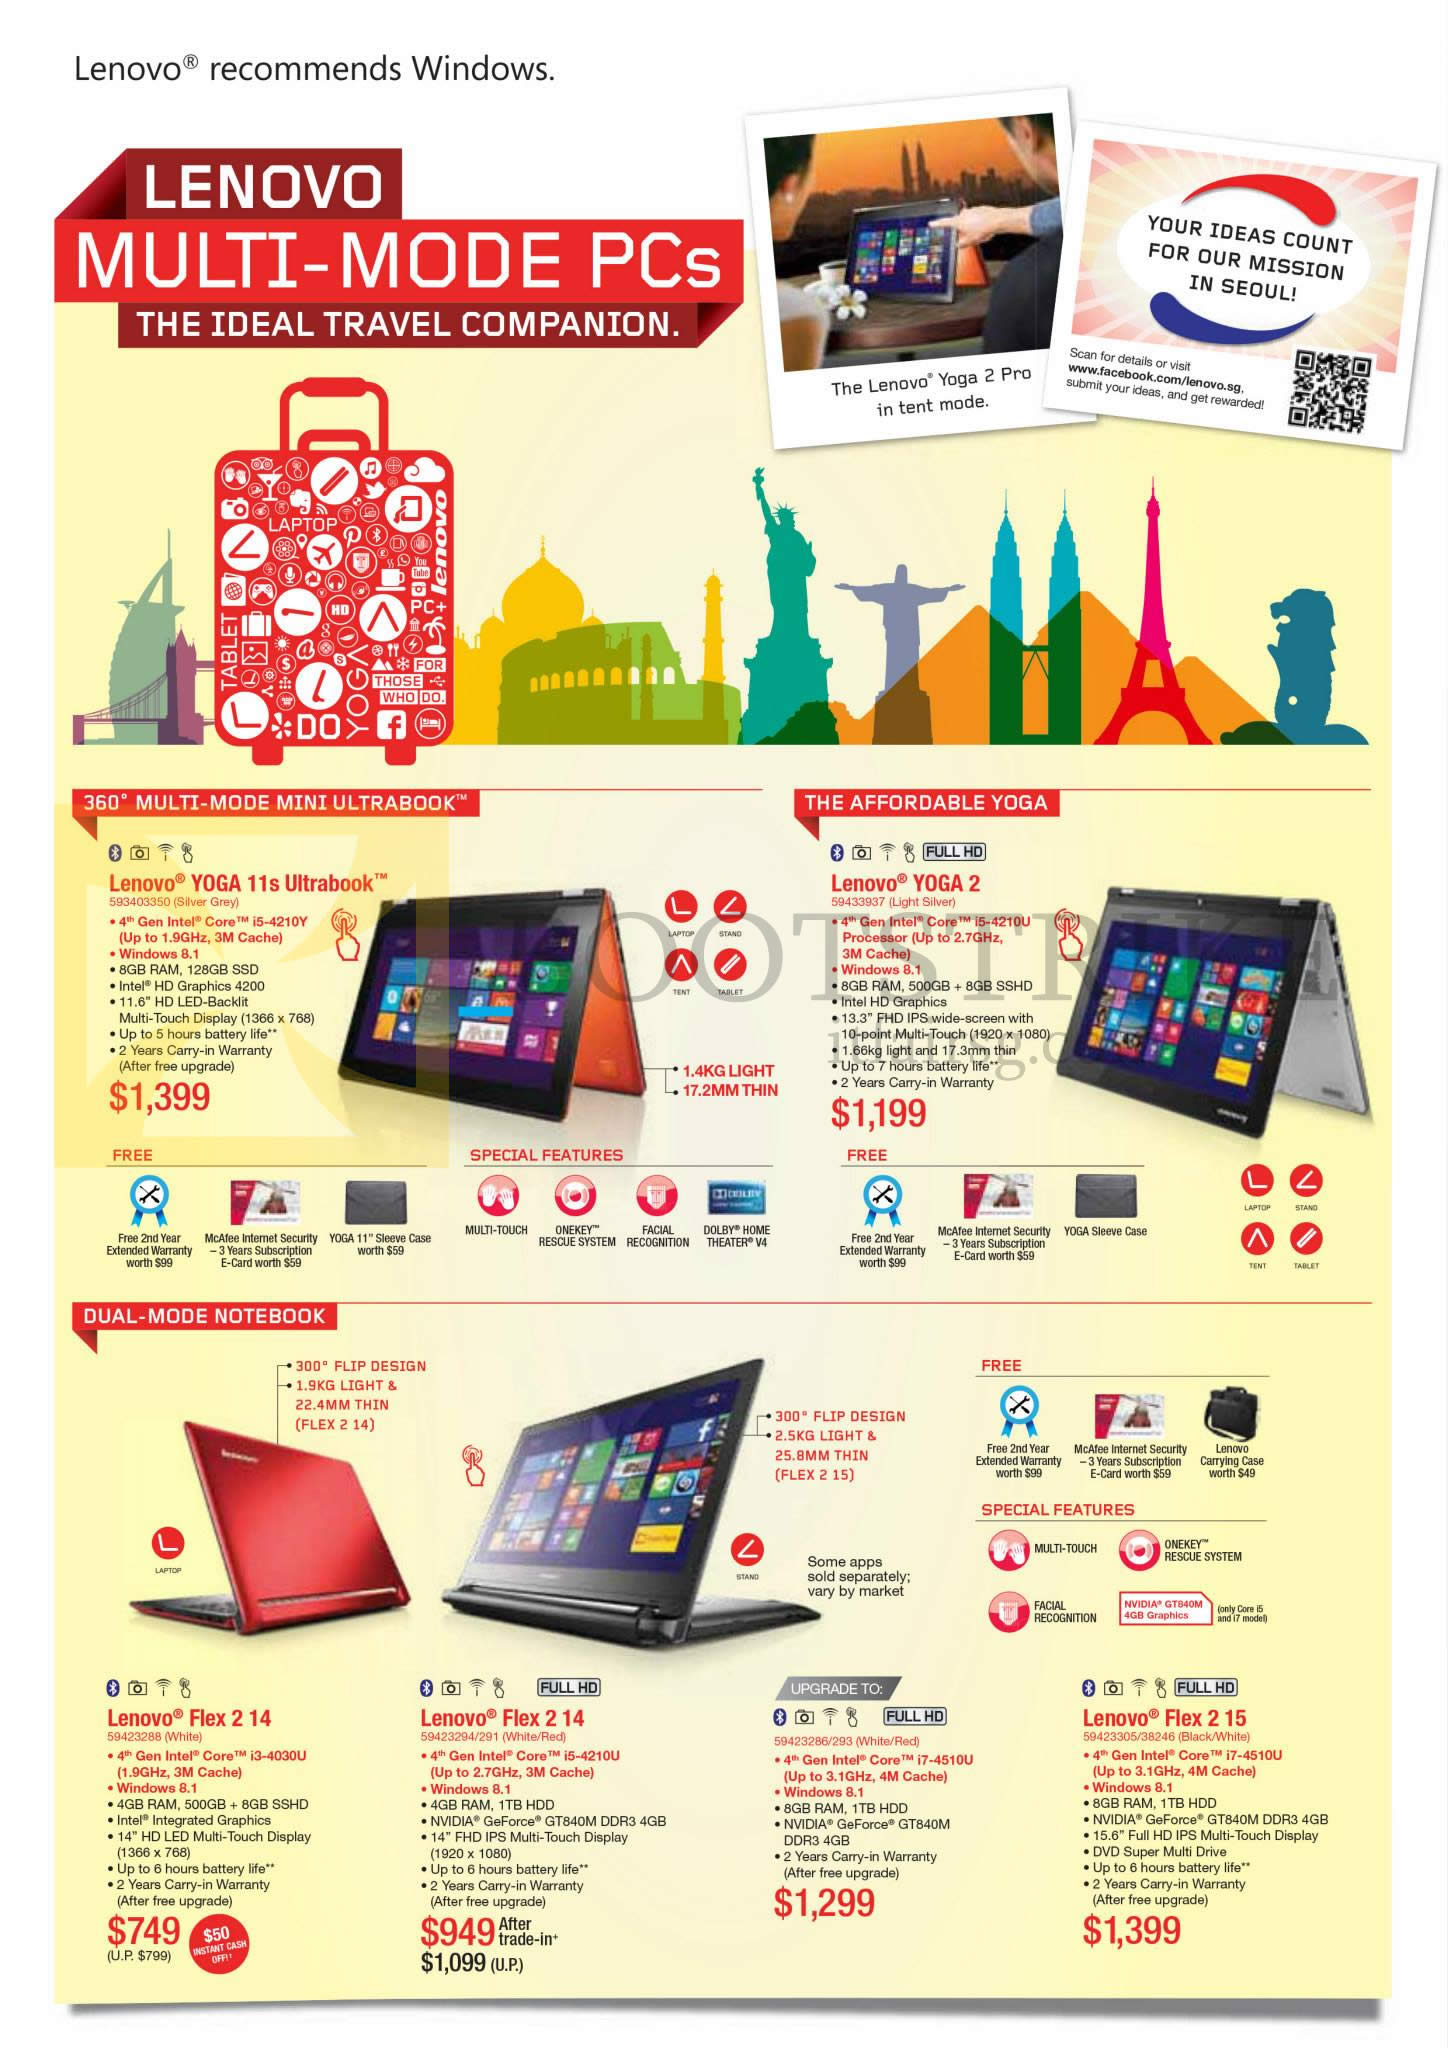 SITEX 2014 price list image brochure of Lenovo Notebooks Yoga 11s, 2, Flex 2 14, Flex 2 15